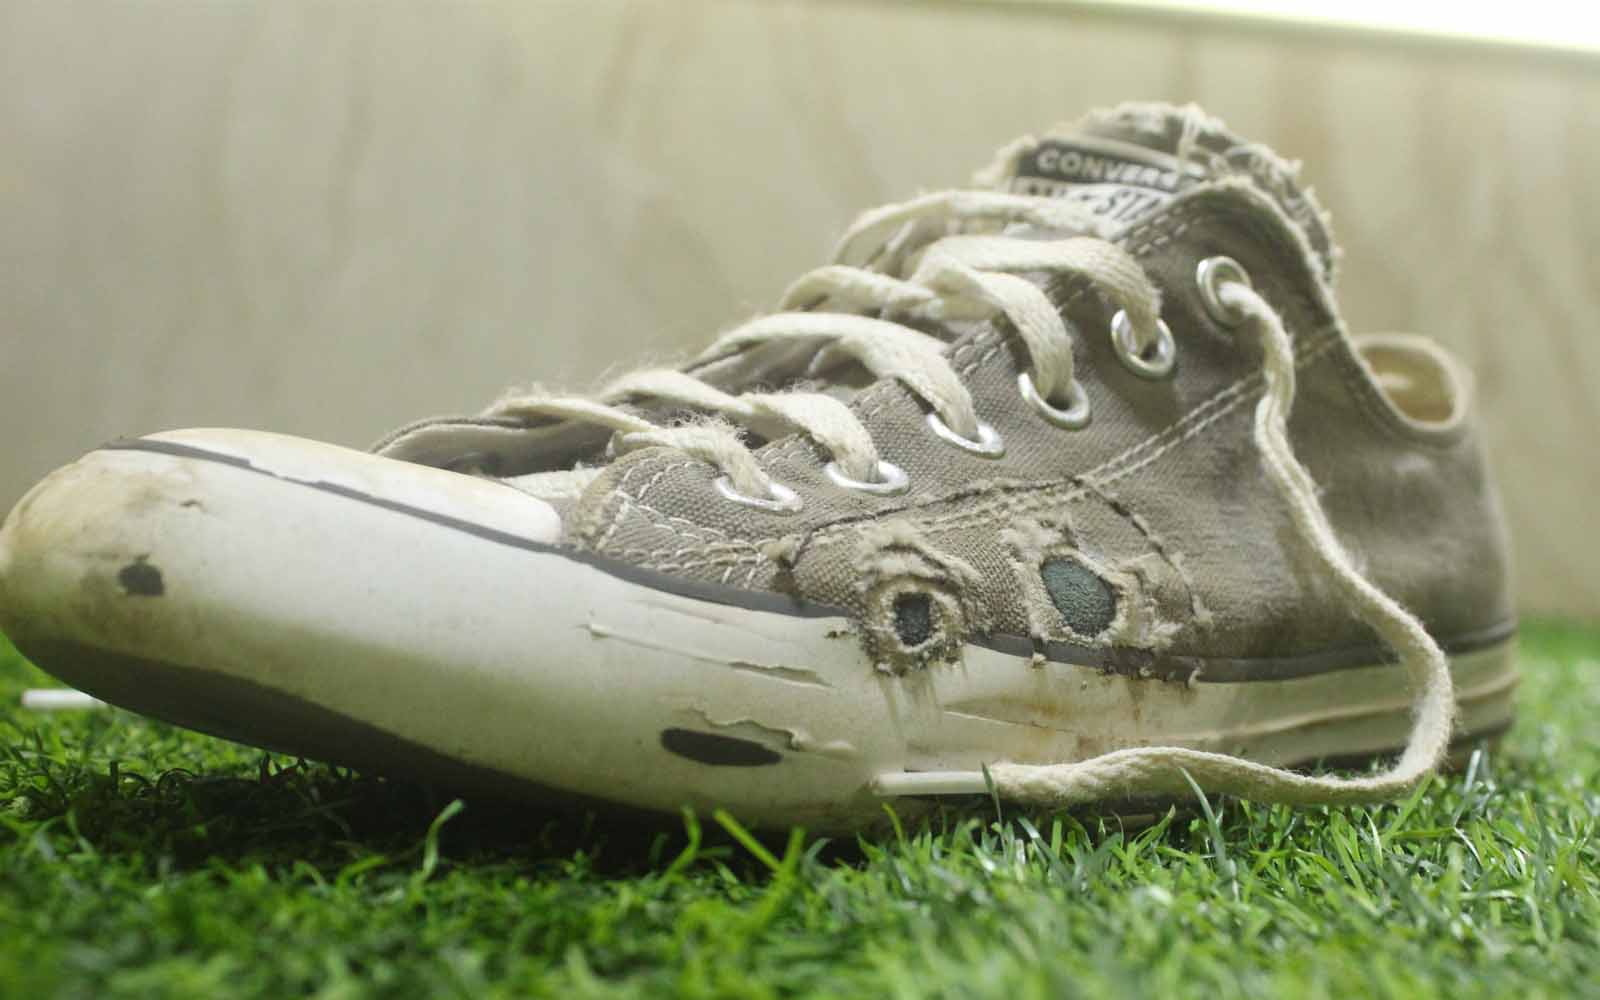 Ripped skate shoe